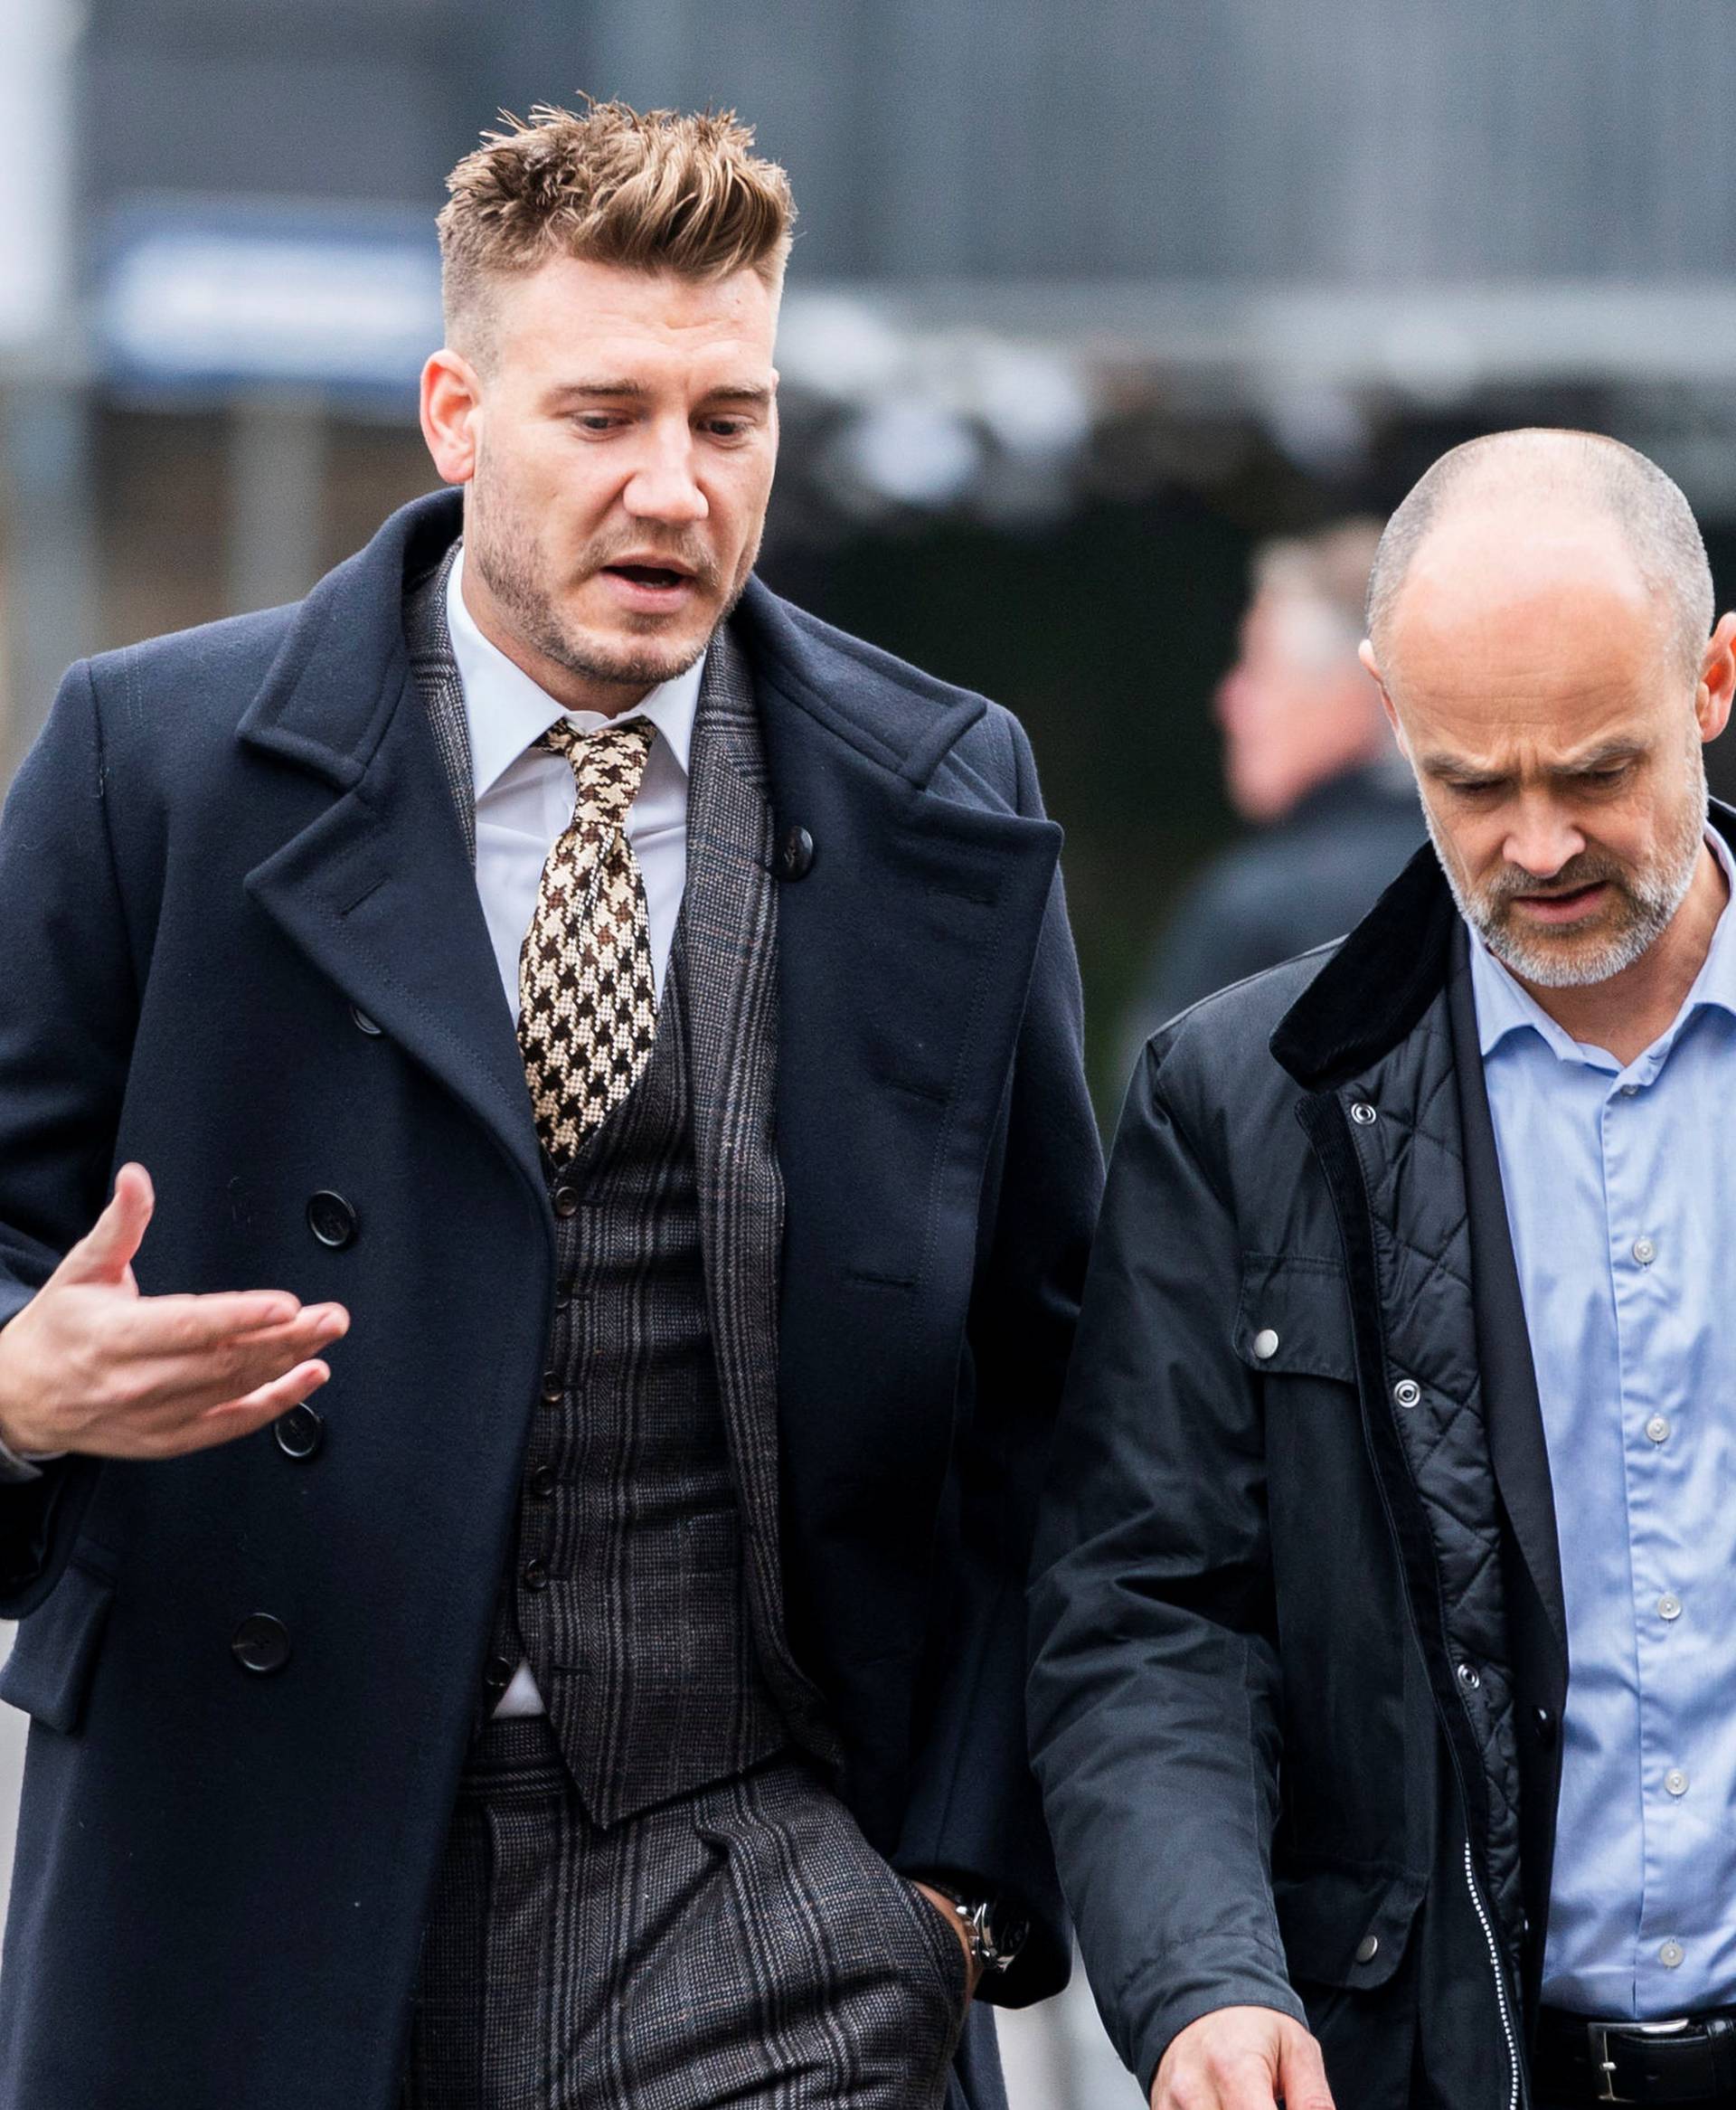 Denmark striker Nicklas Bendtner and lawyer Anders Nemeth arrive at the Copenhagen City Council